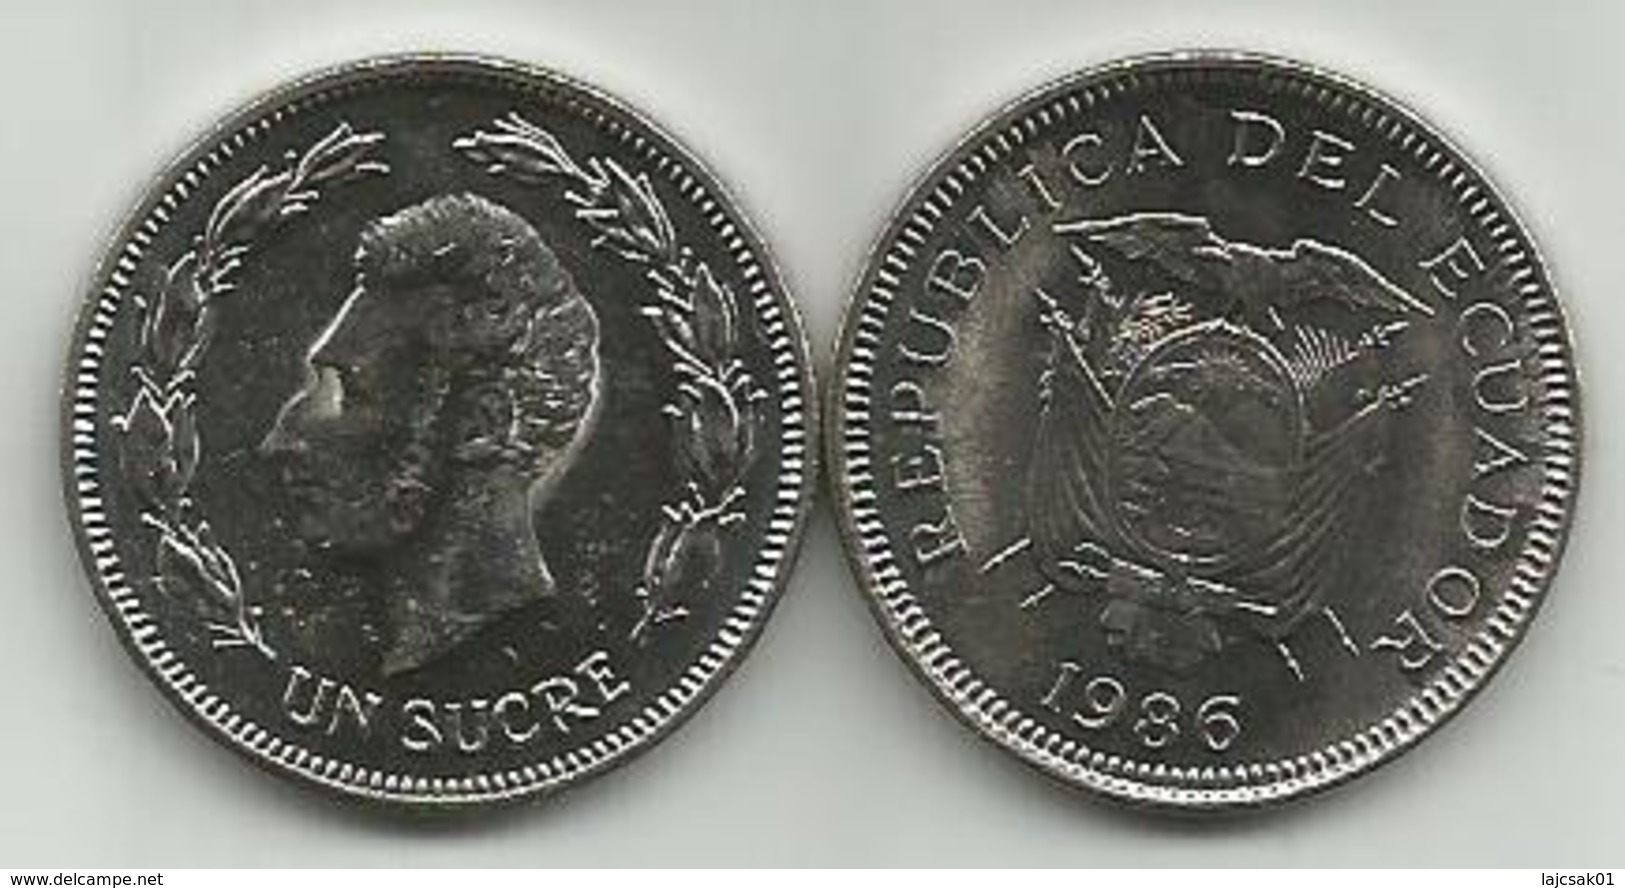 Ecuador 1 Sucre 1986. High Grade - Ecuador